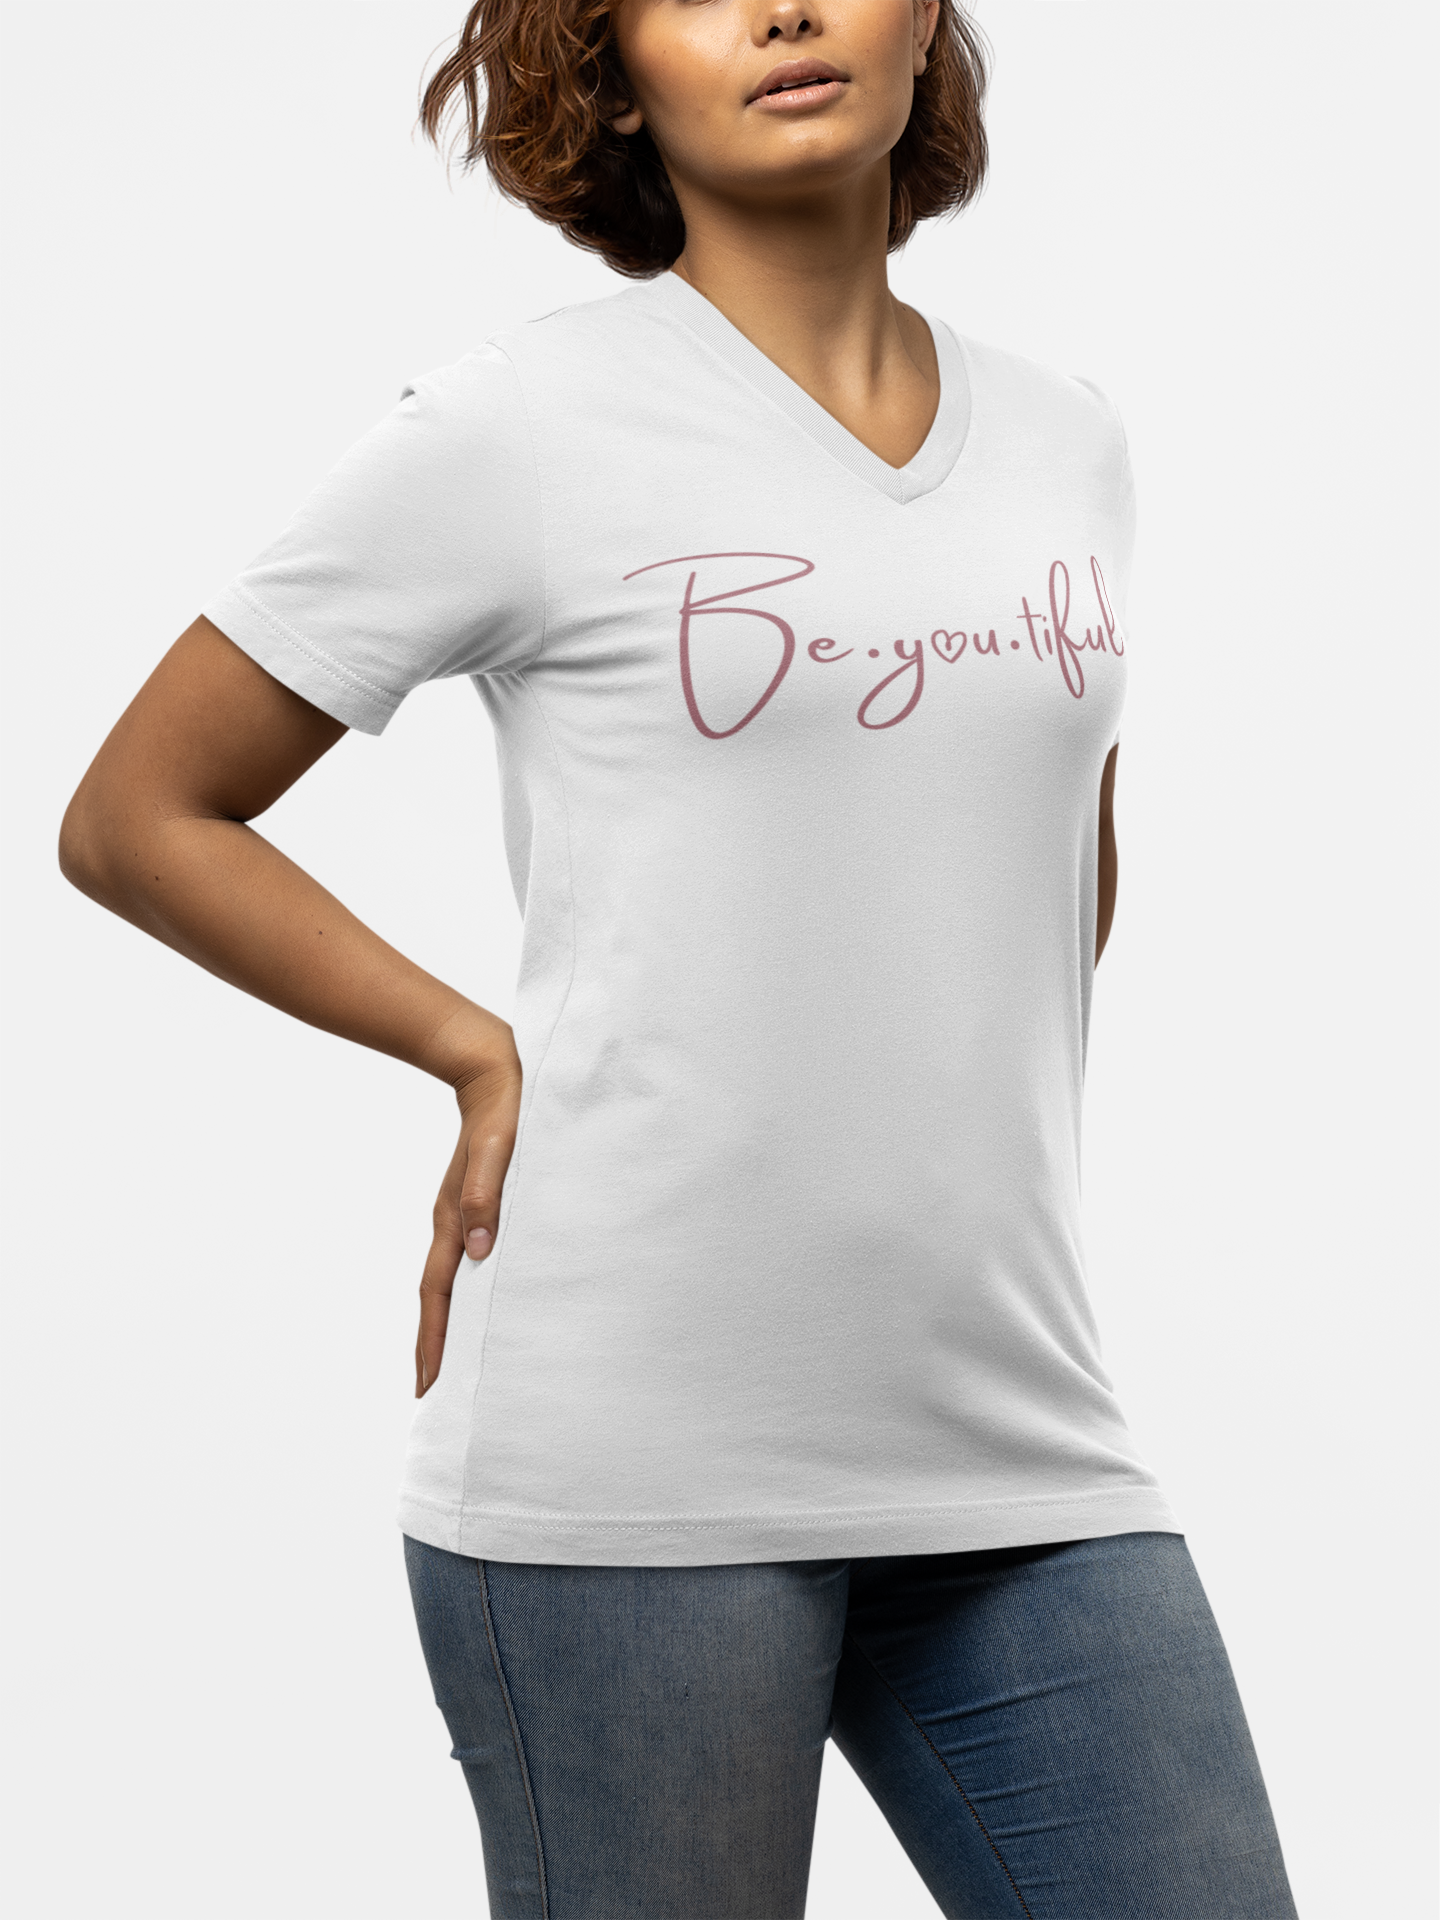 Beyoutiful V-Neck T-Shirt - White - pink lettering